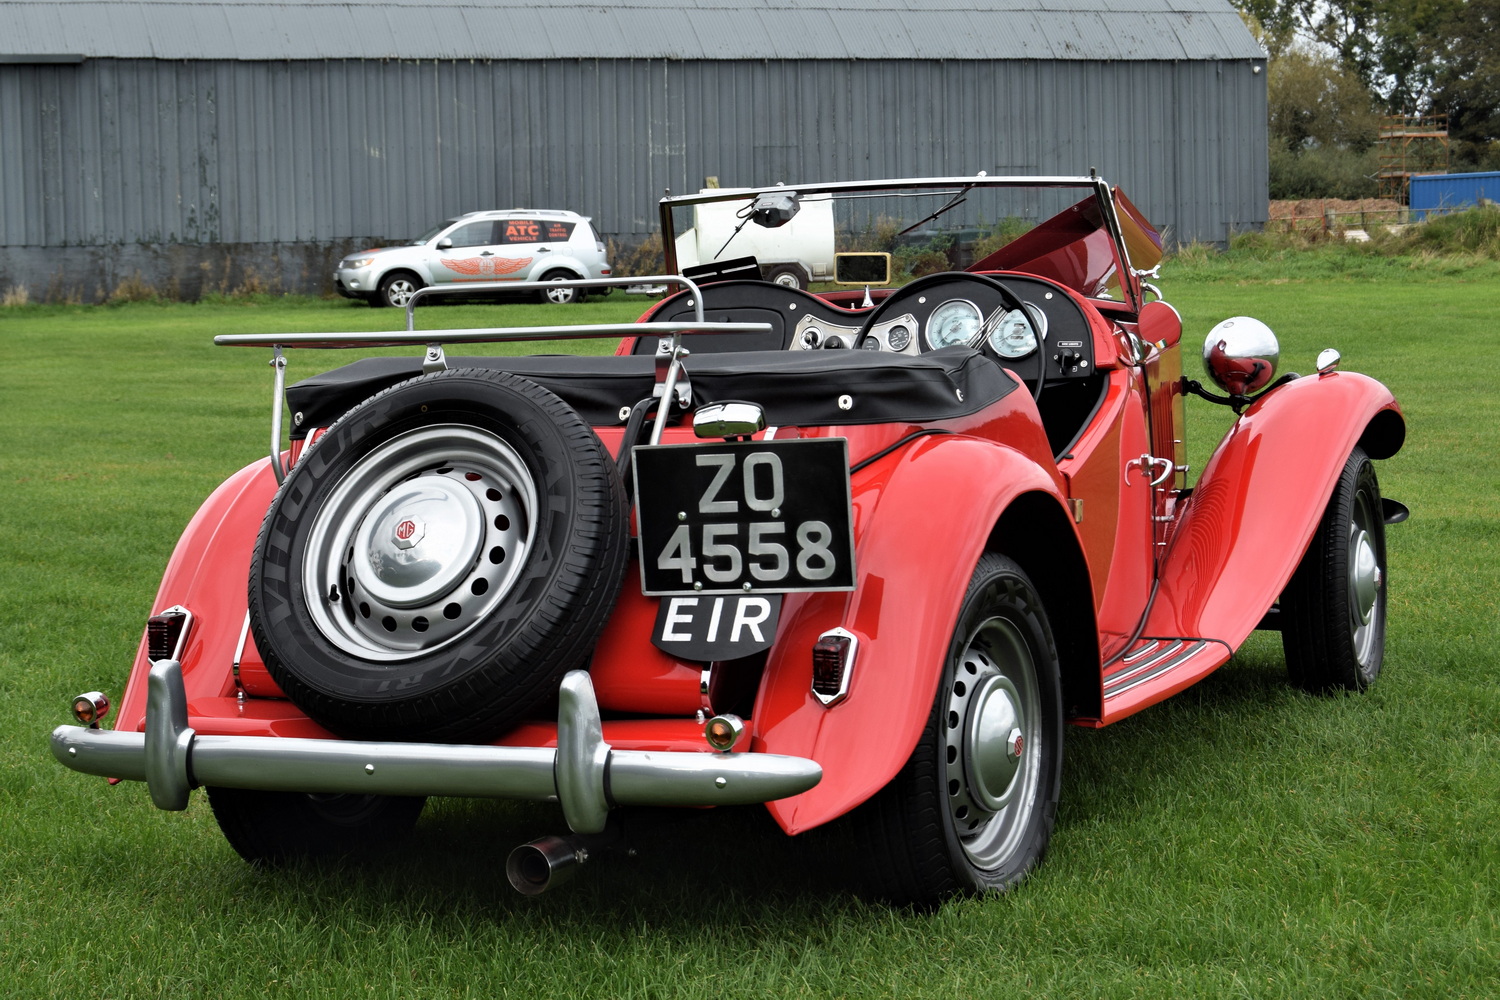 Nationwide features rare Irish-built MG